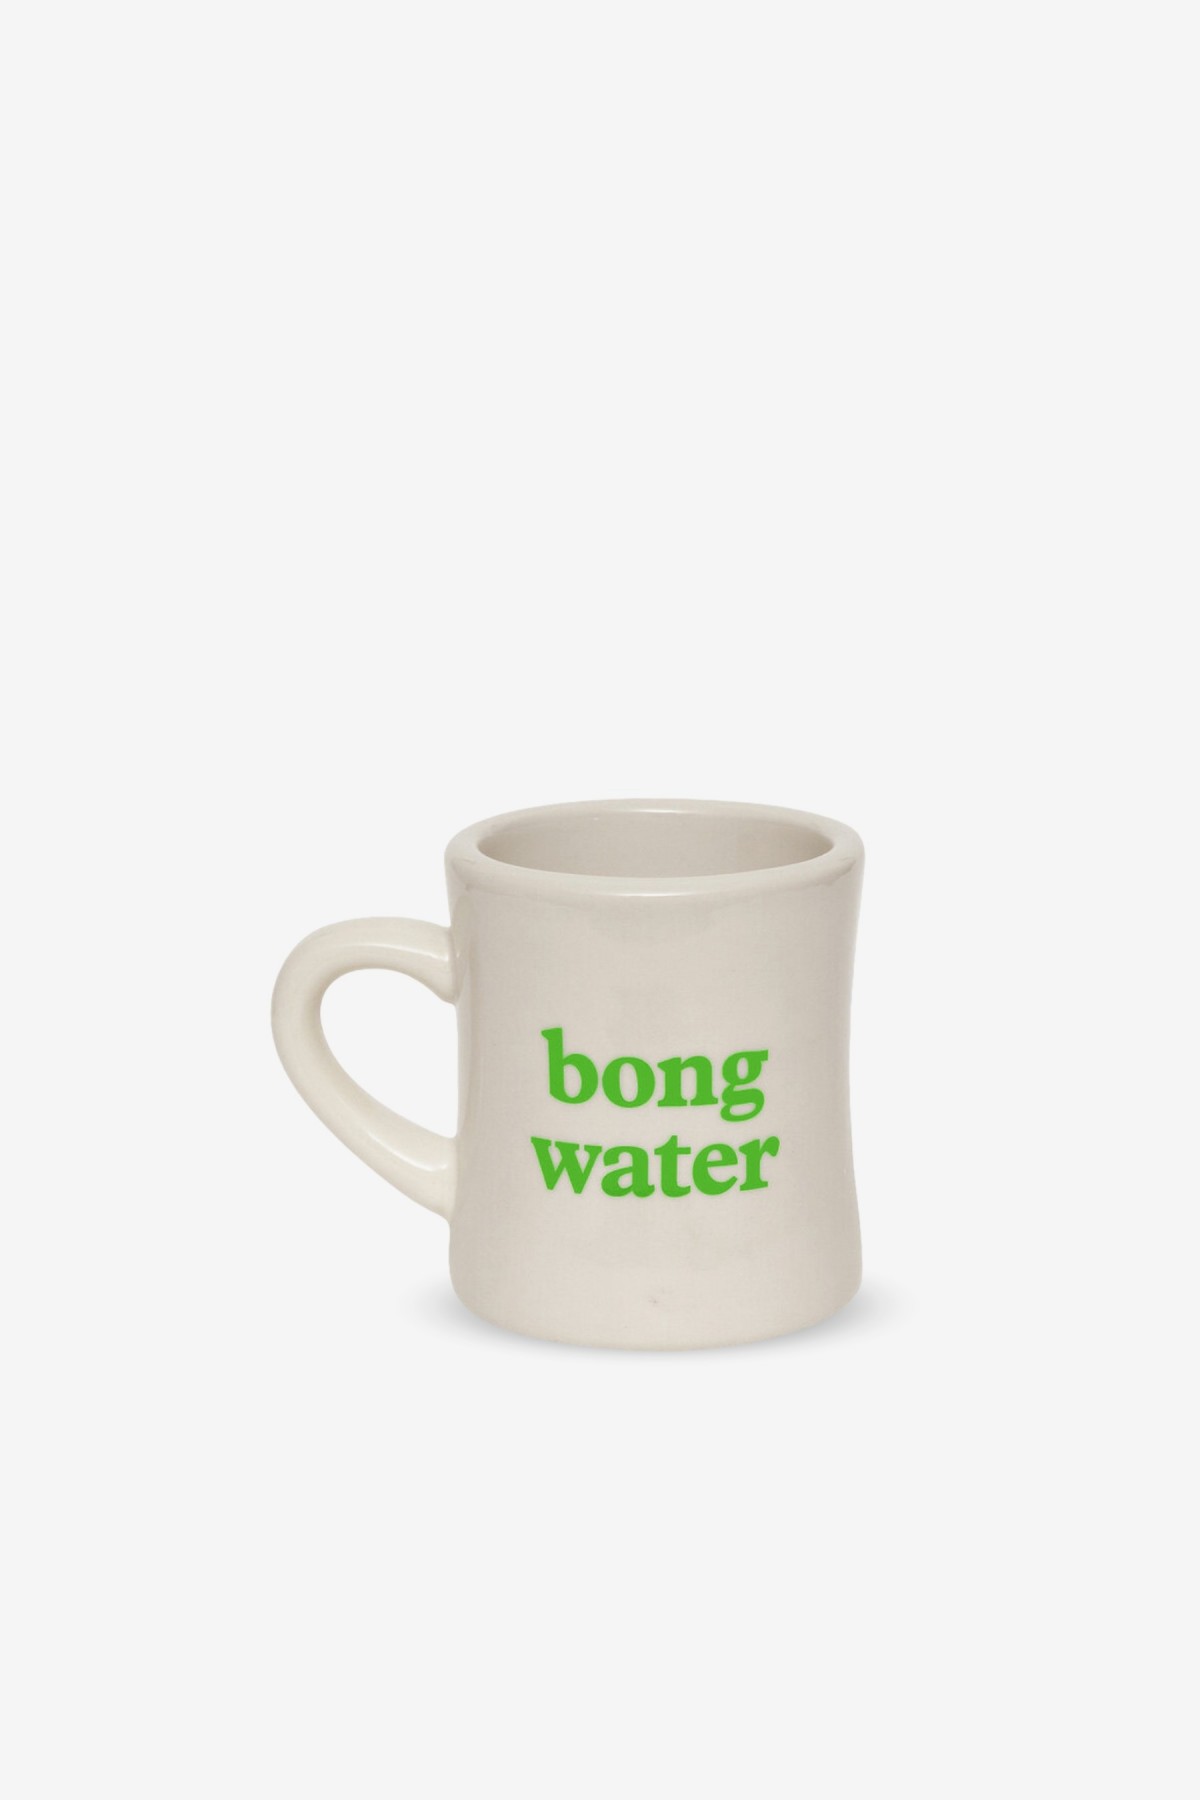 Mister Green Bong Water Mug in 